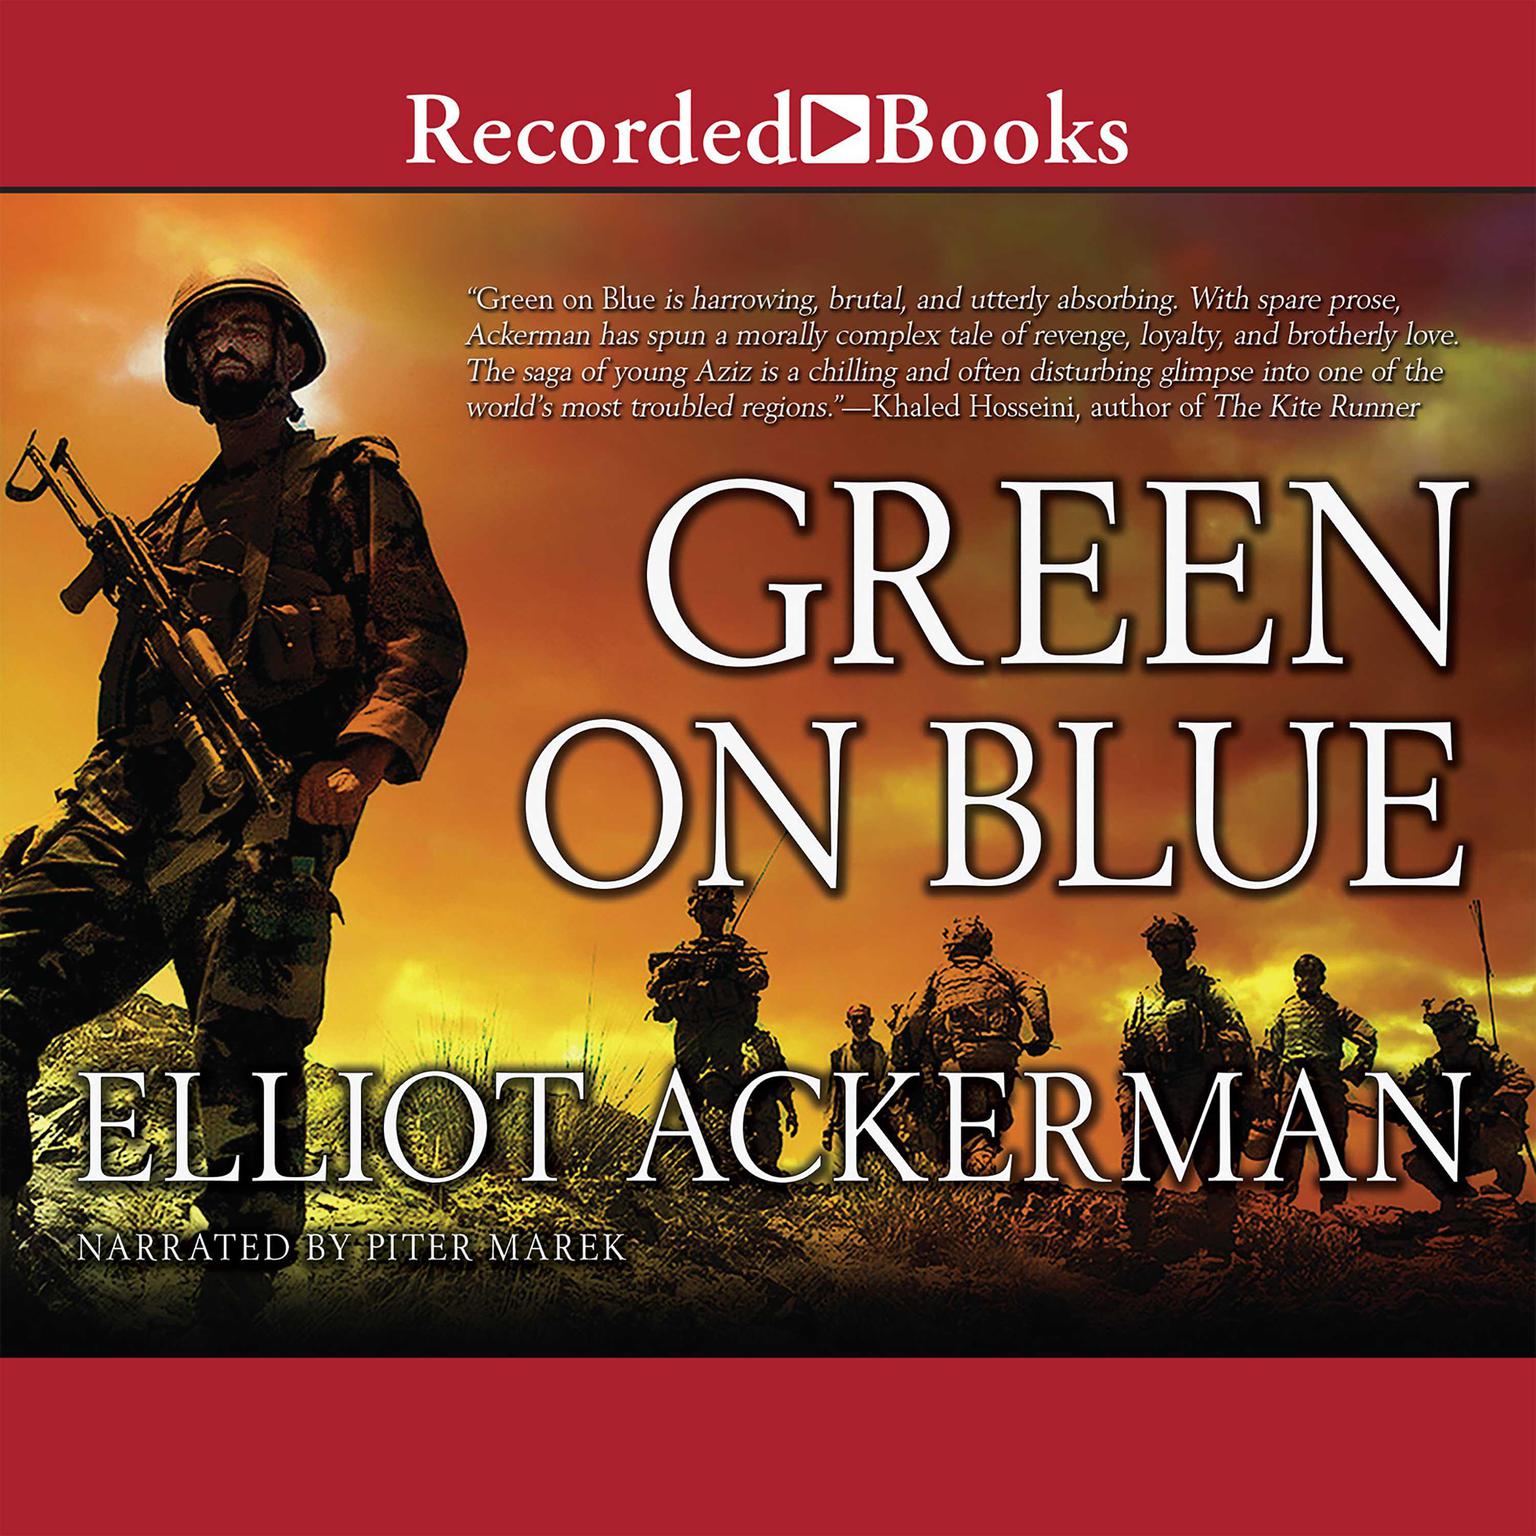 Green on Blue Audiobook, by Elliot Ackerman